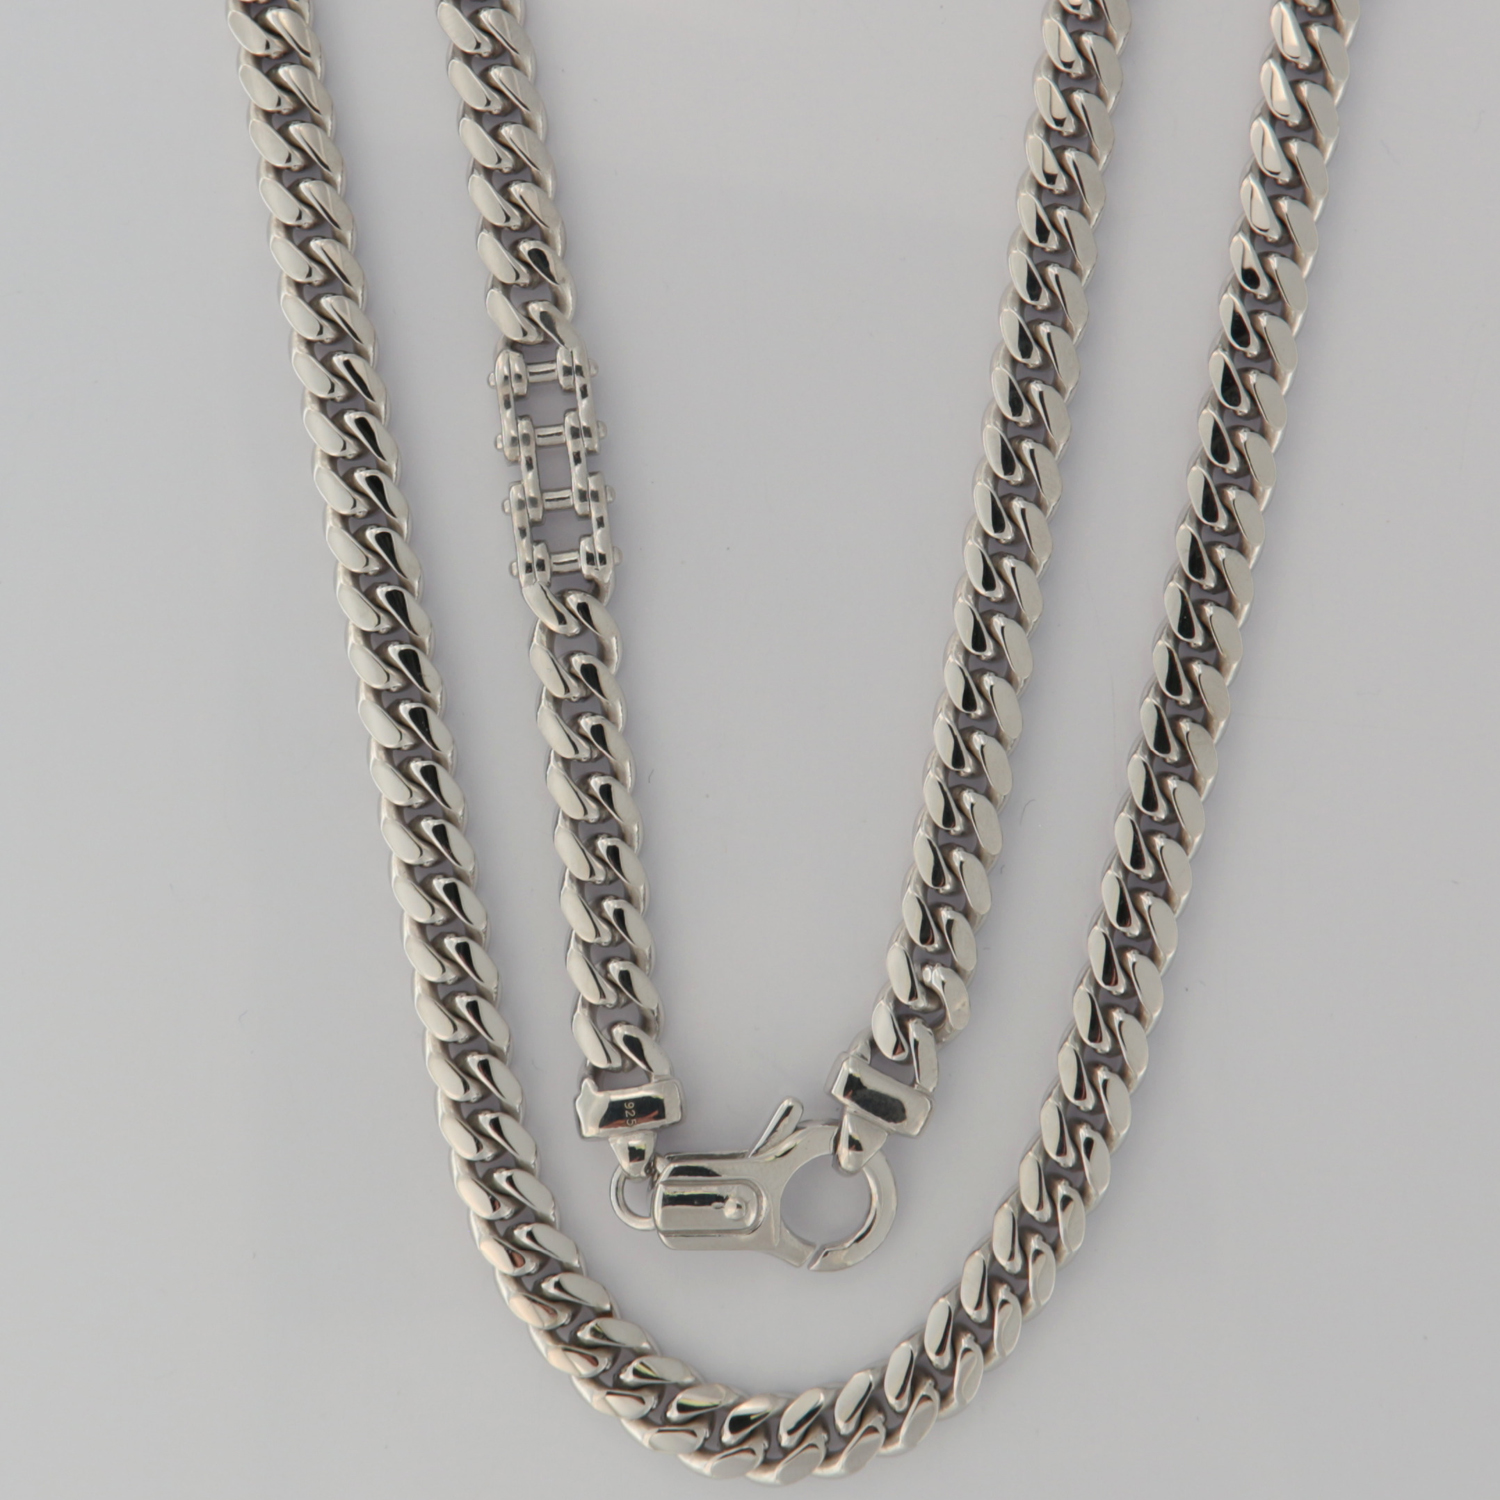 Necklace men's 1 bike chain element rhodium plated-image